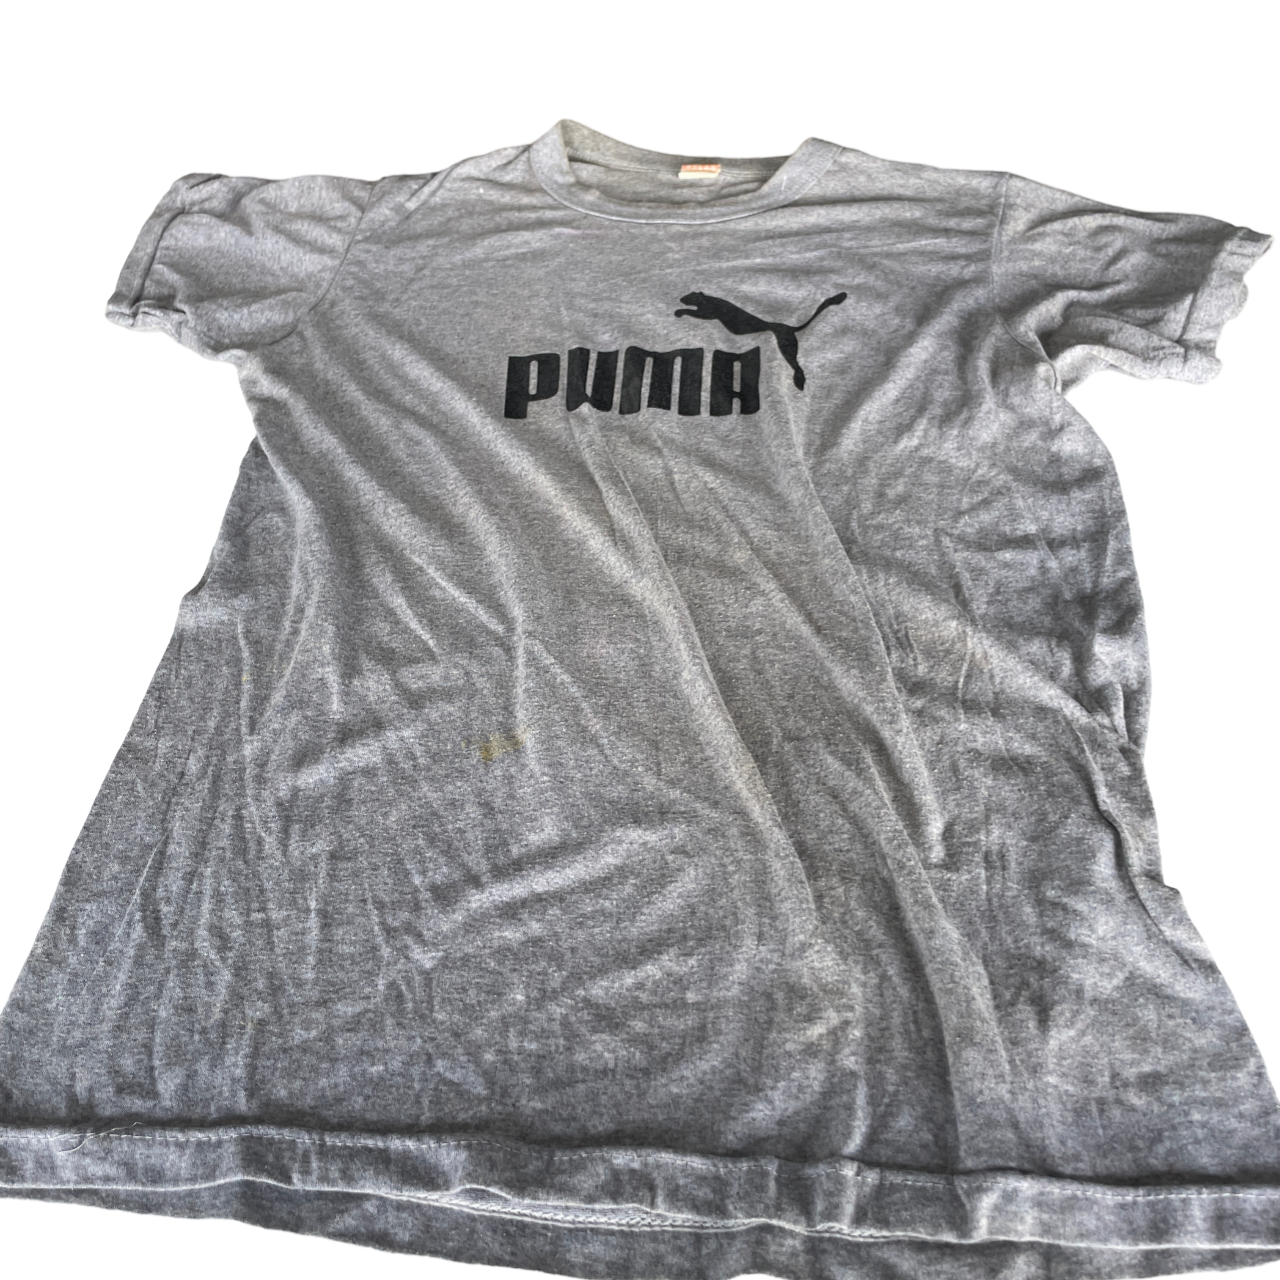 PUMA Cotton T-Shirts for Men in L SKU 5201